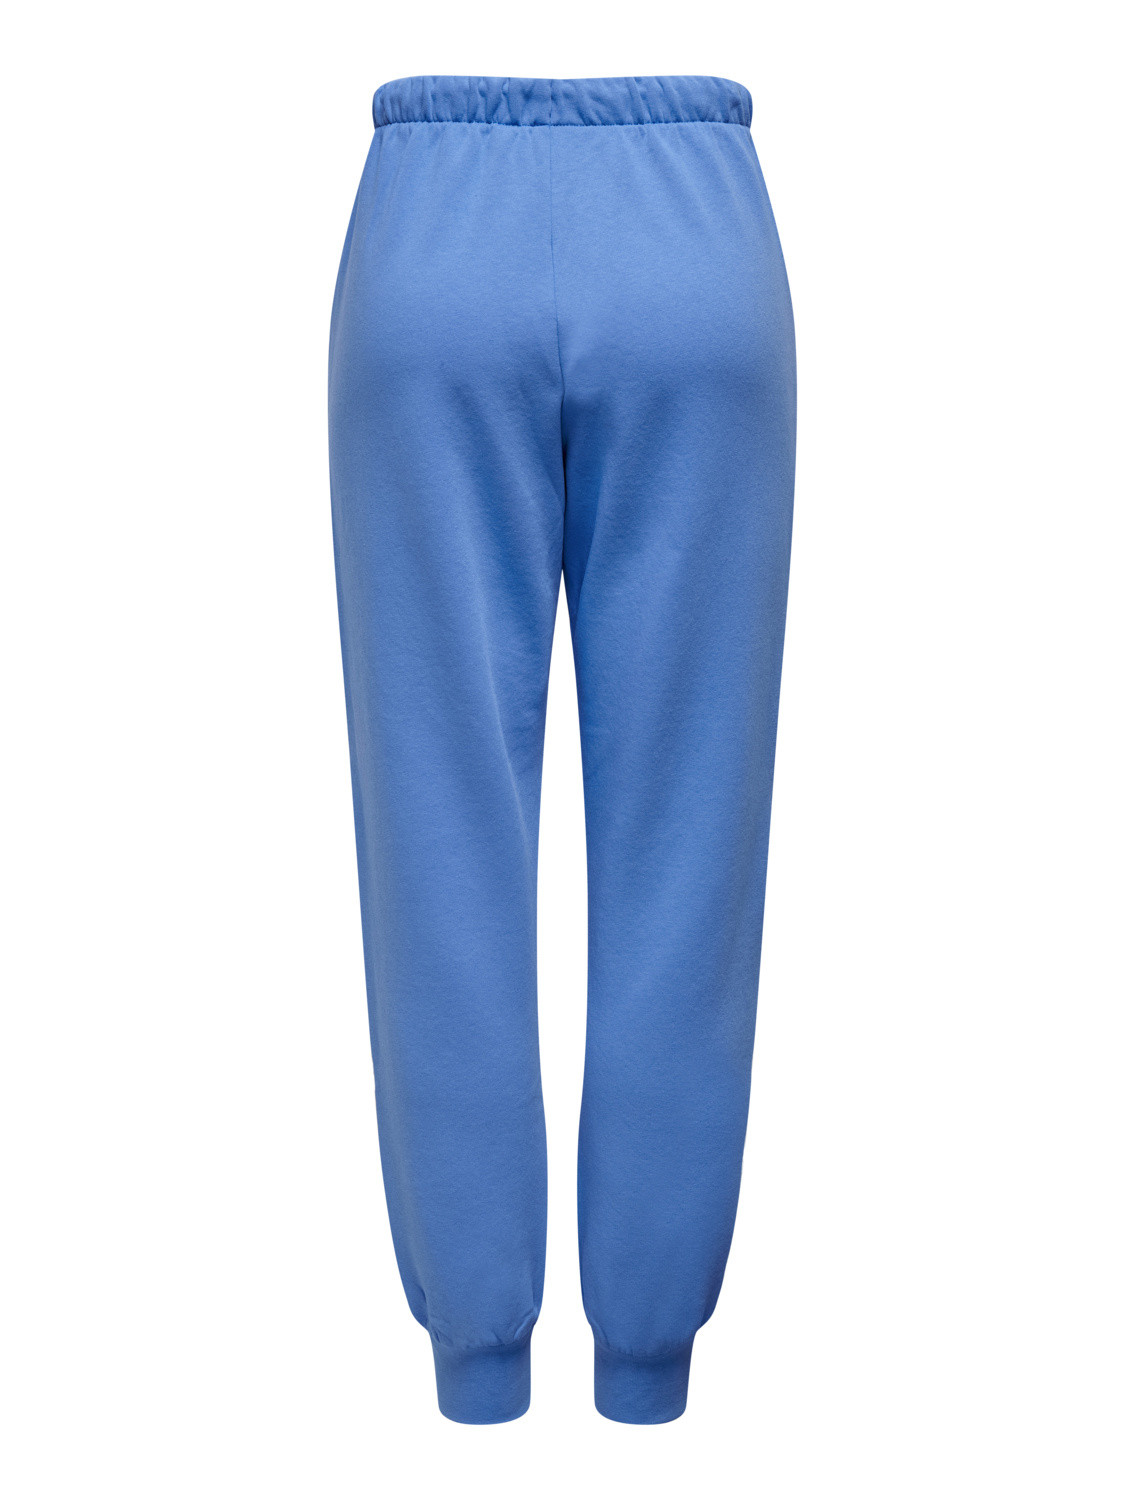 Women's sweatpants, Light Blue, large image number 1